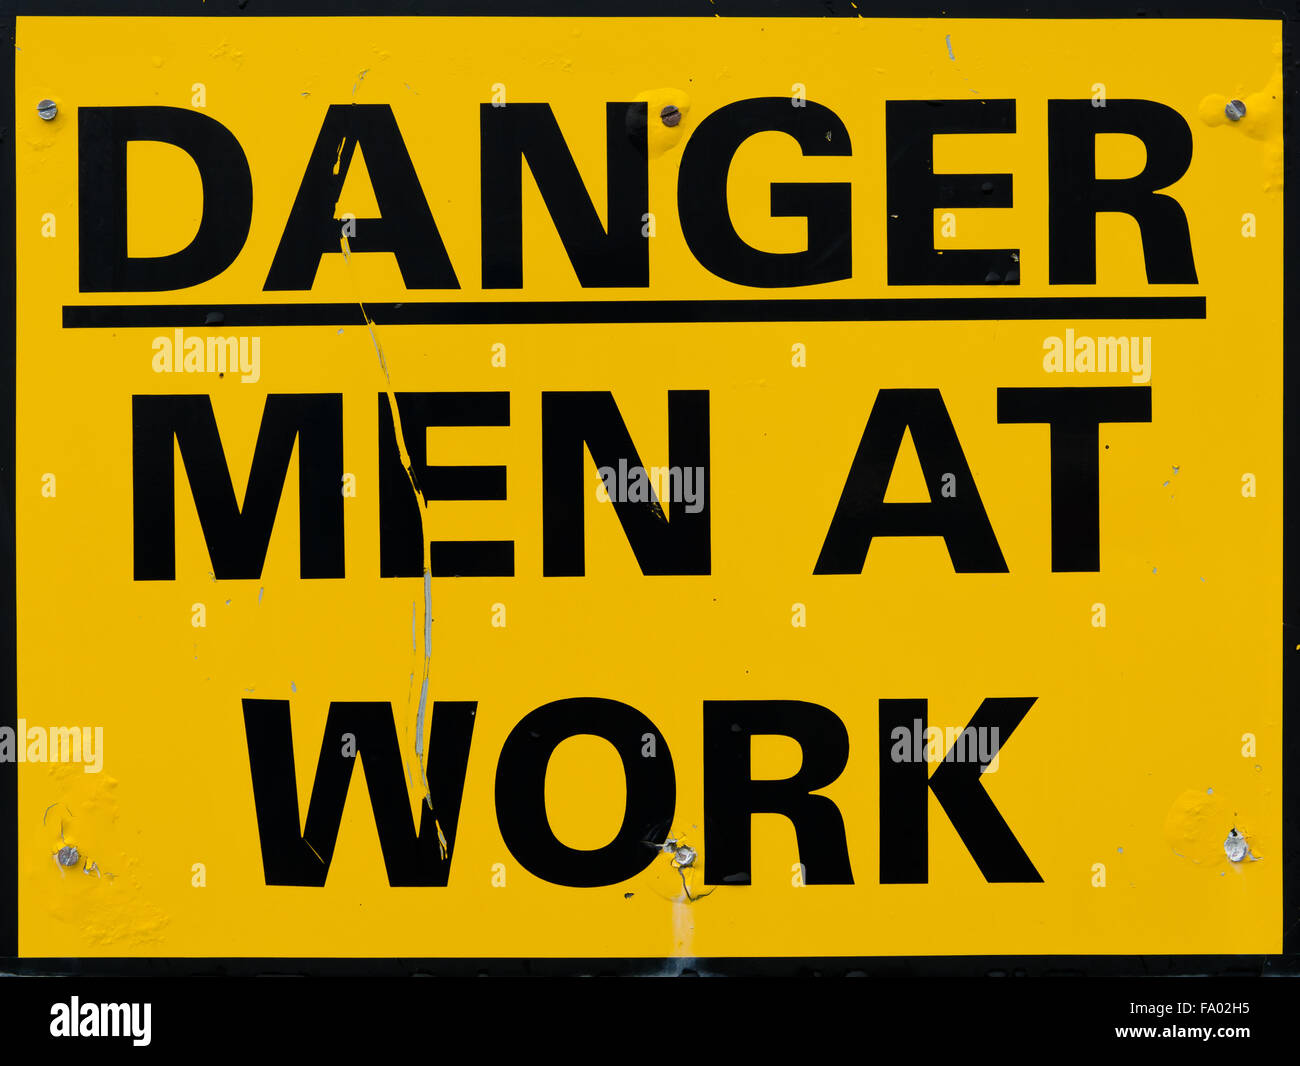 Man At Work Sign Image 46